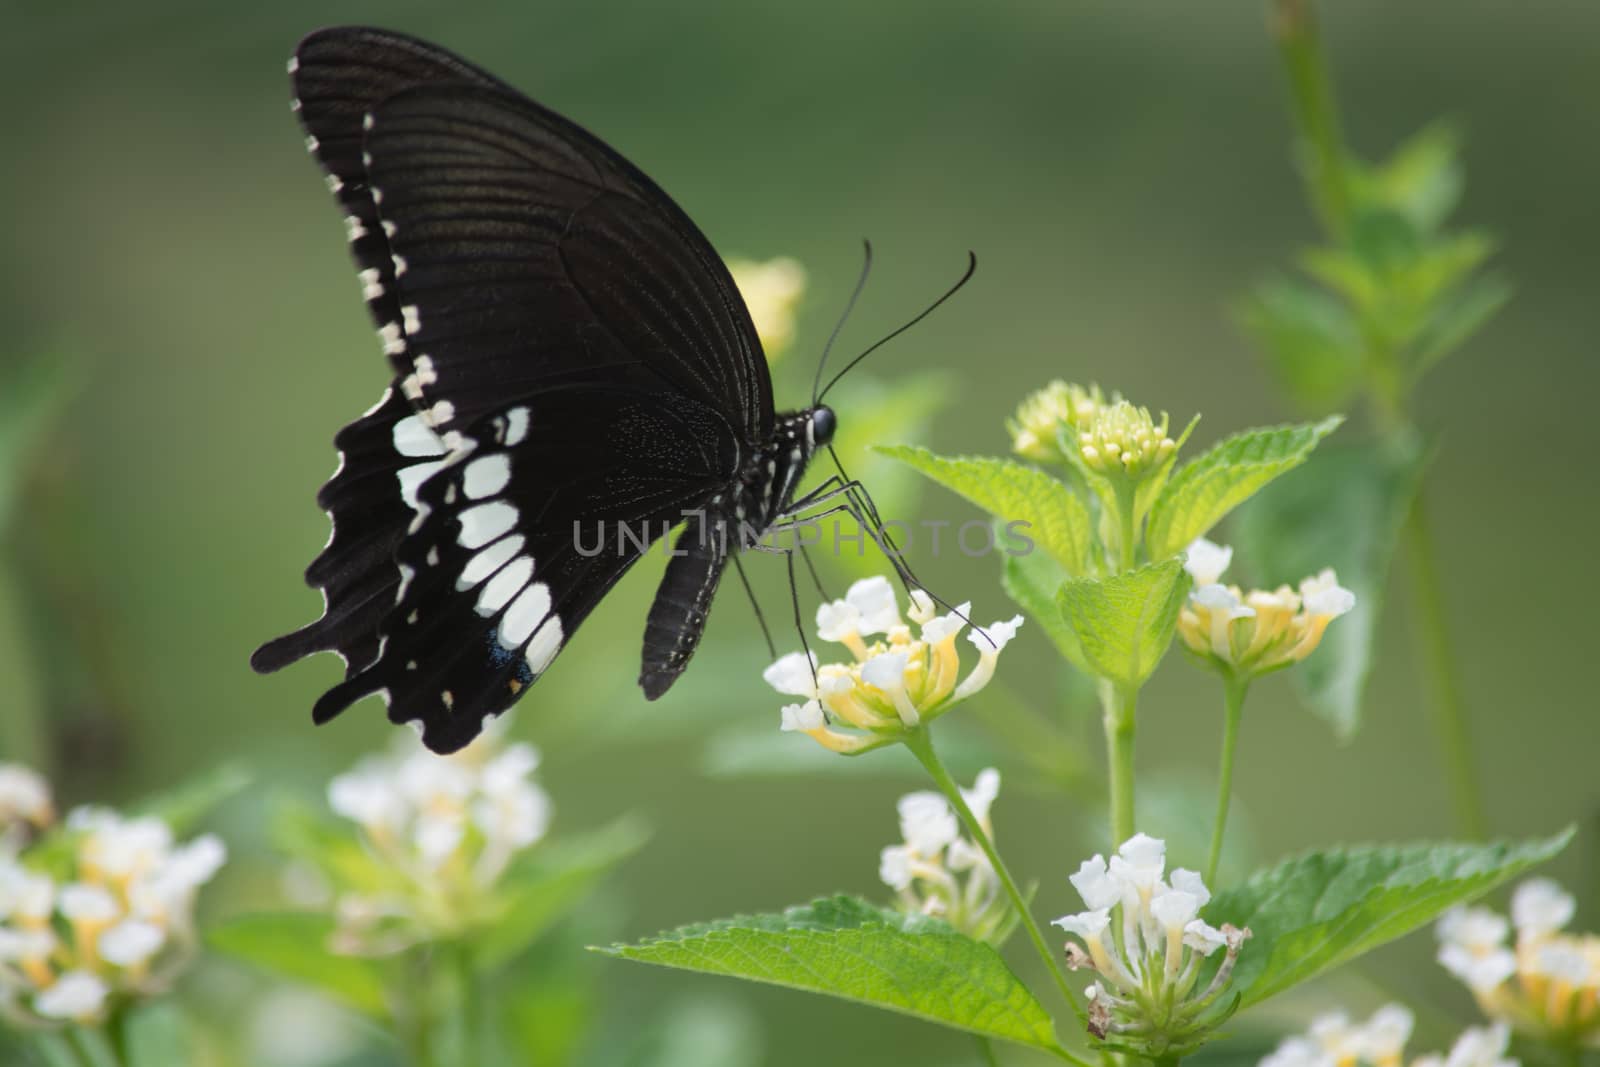 Common Mormon butterfly, Papilio palytes on Lantana flower.